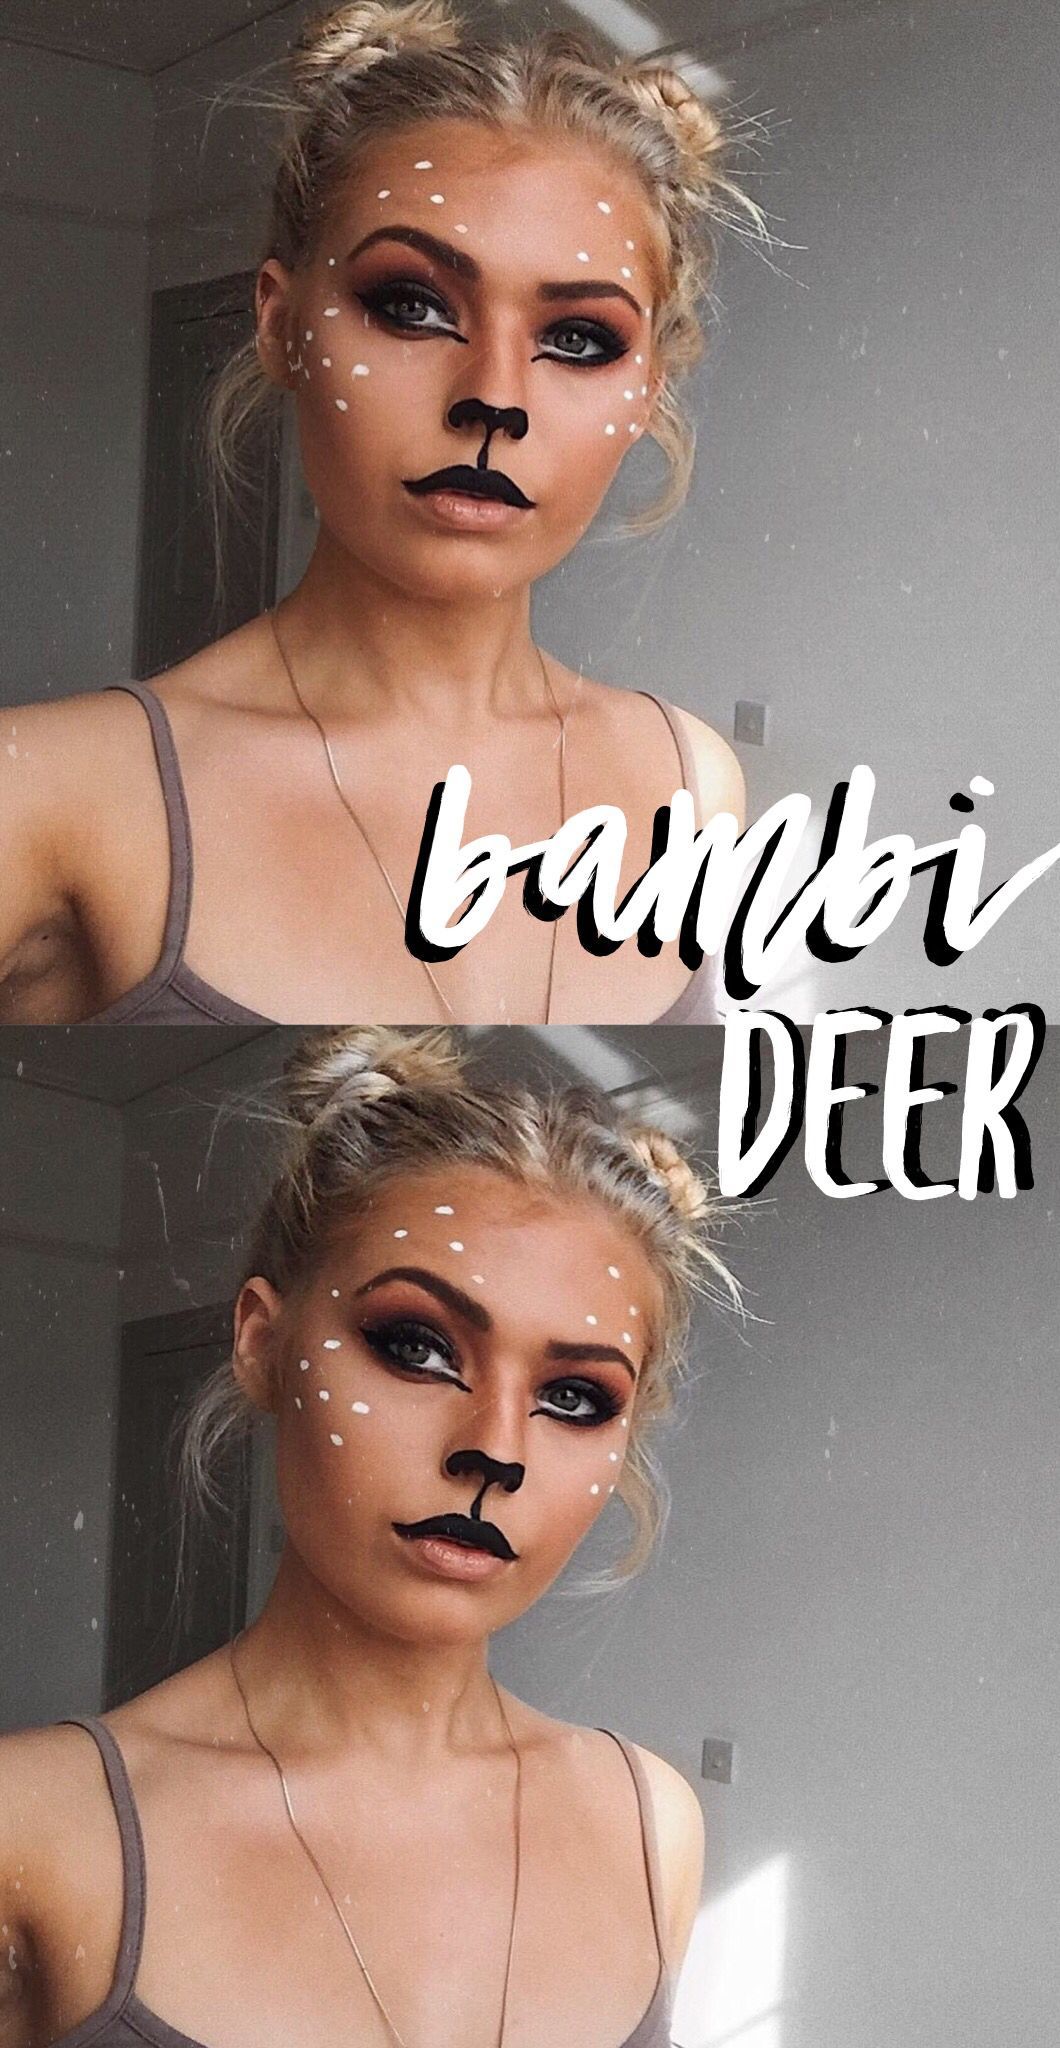 bambi deer makeup tutorial for halloween -   12 deer makeup Halloween ideas